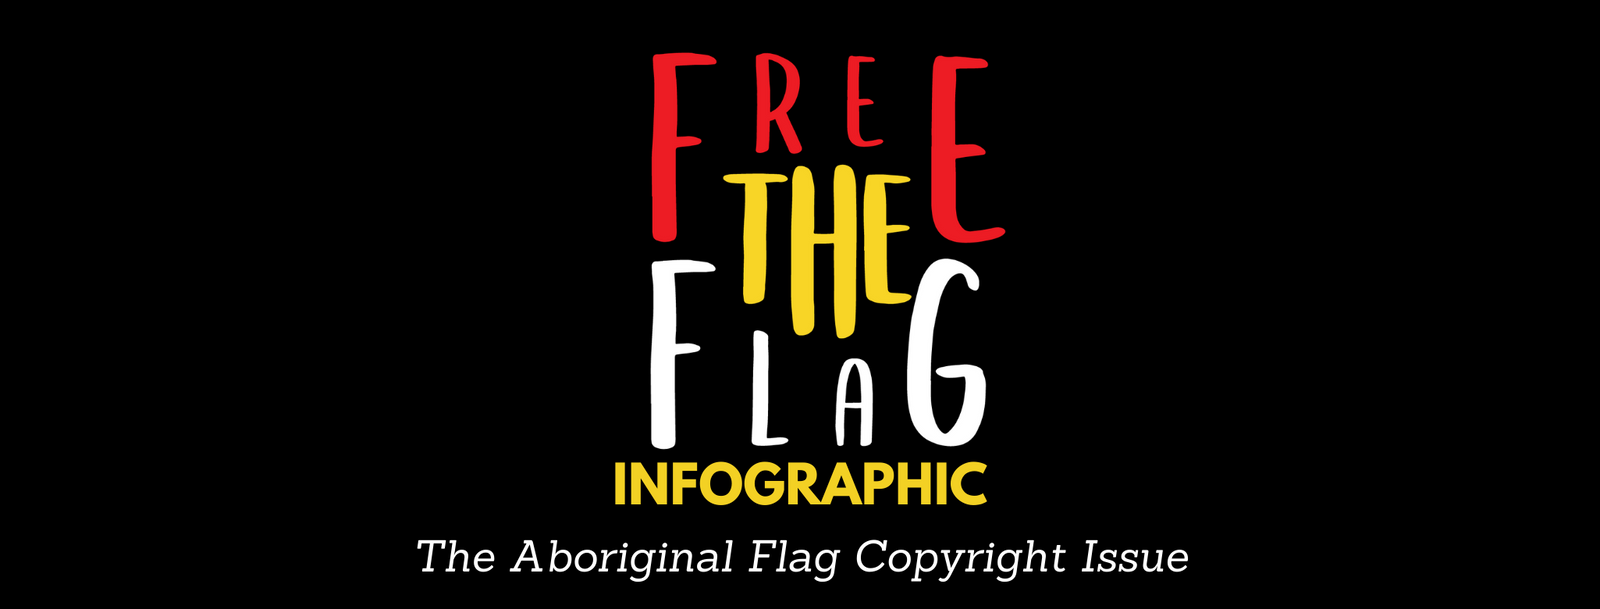 The Aboriginal Flag Copyright Infographic